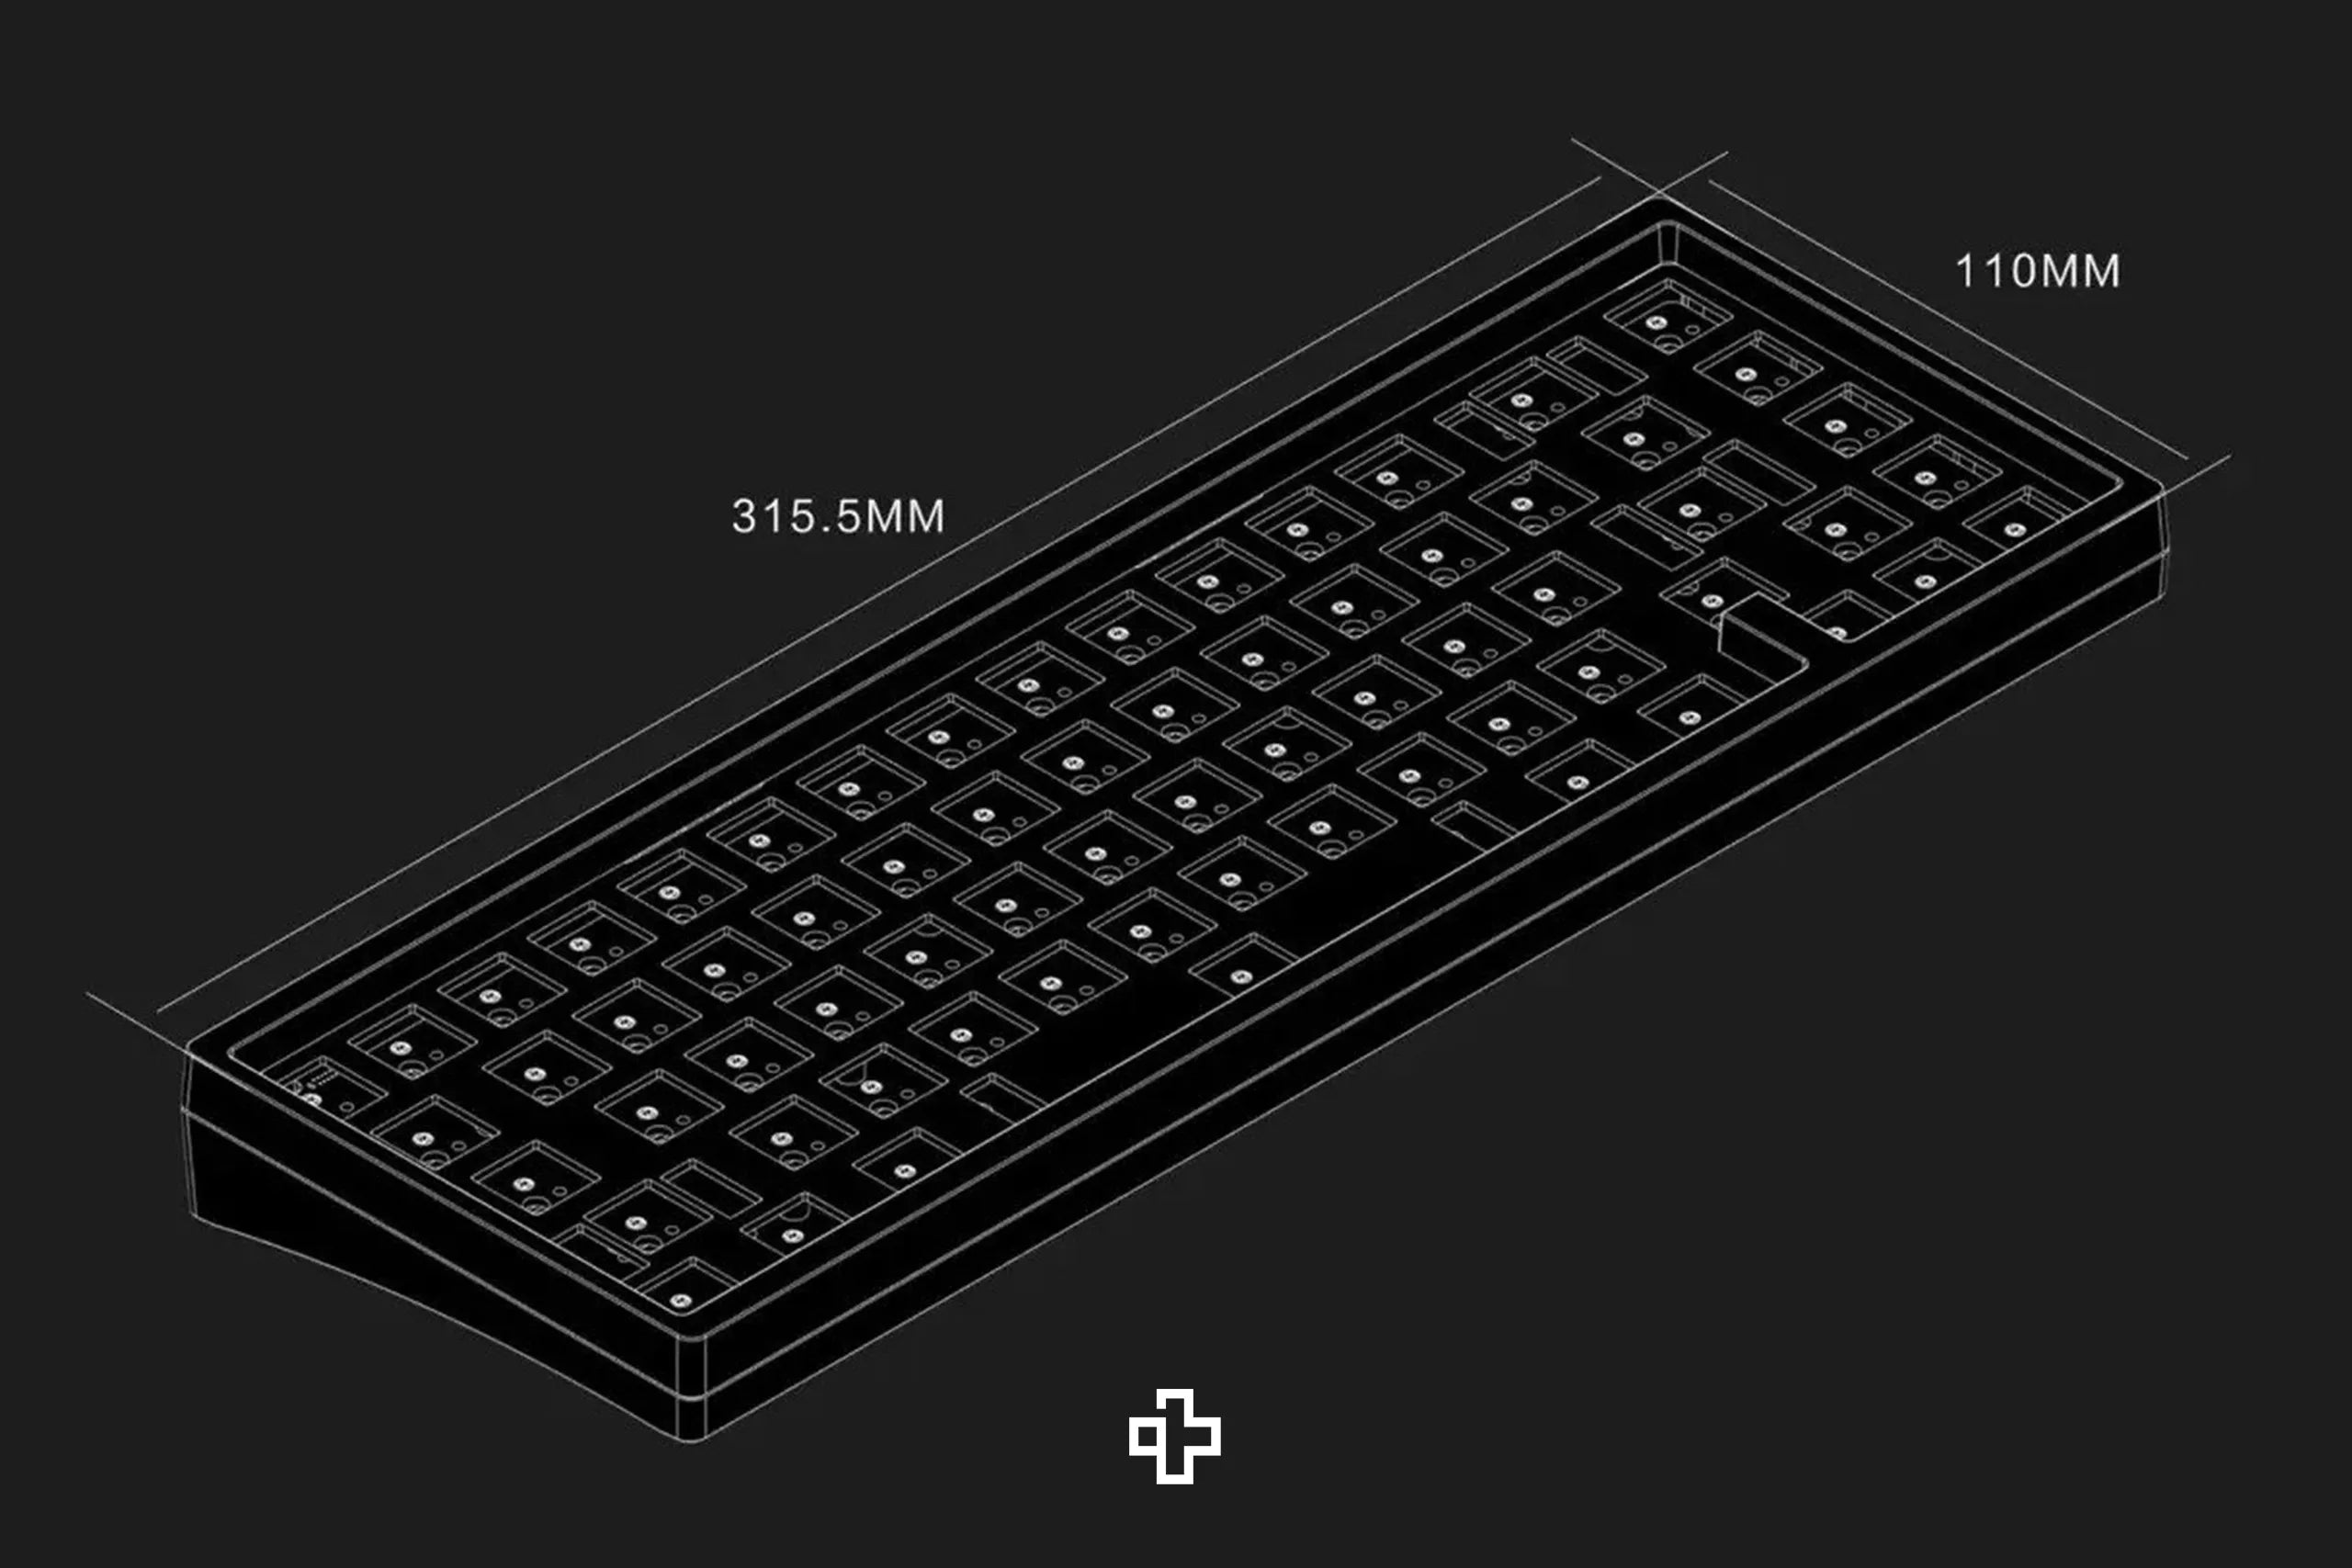 KBD67 Lite R4 Kit Tastatura Mecanica